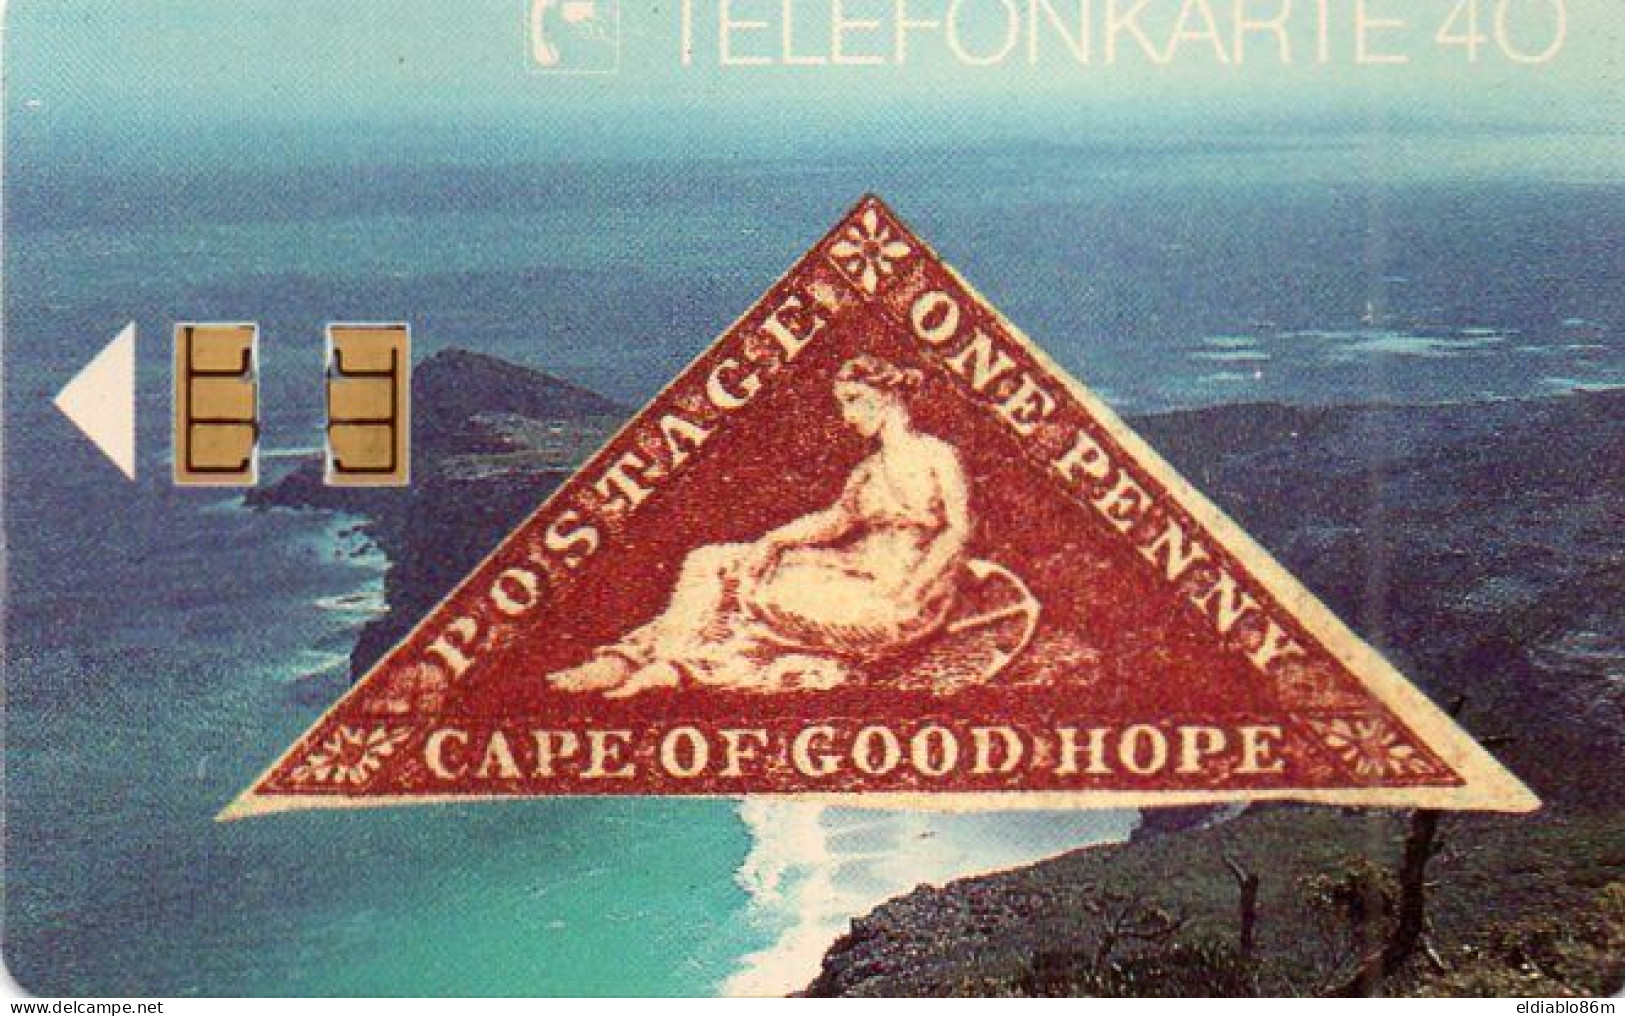 GERMANY - CHIP CARD - E 04 08.91 - BRIEFMARKEN 4 CAPE OF GOOD HOPE (1109) - STAMP - E-Reeksen : Uitgave - D. Postreclame